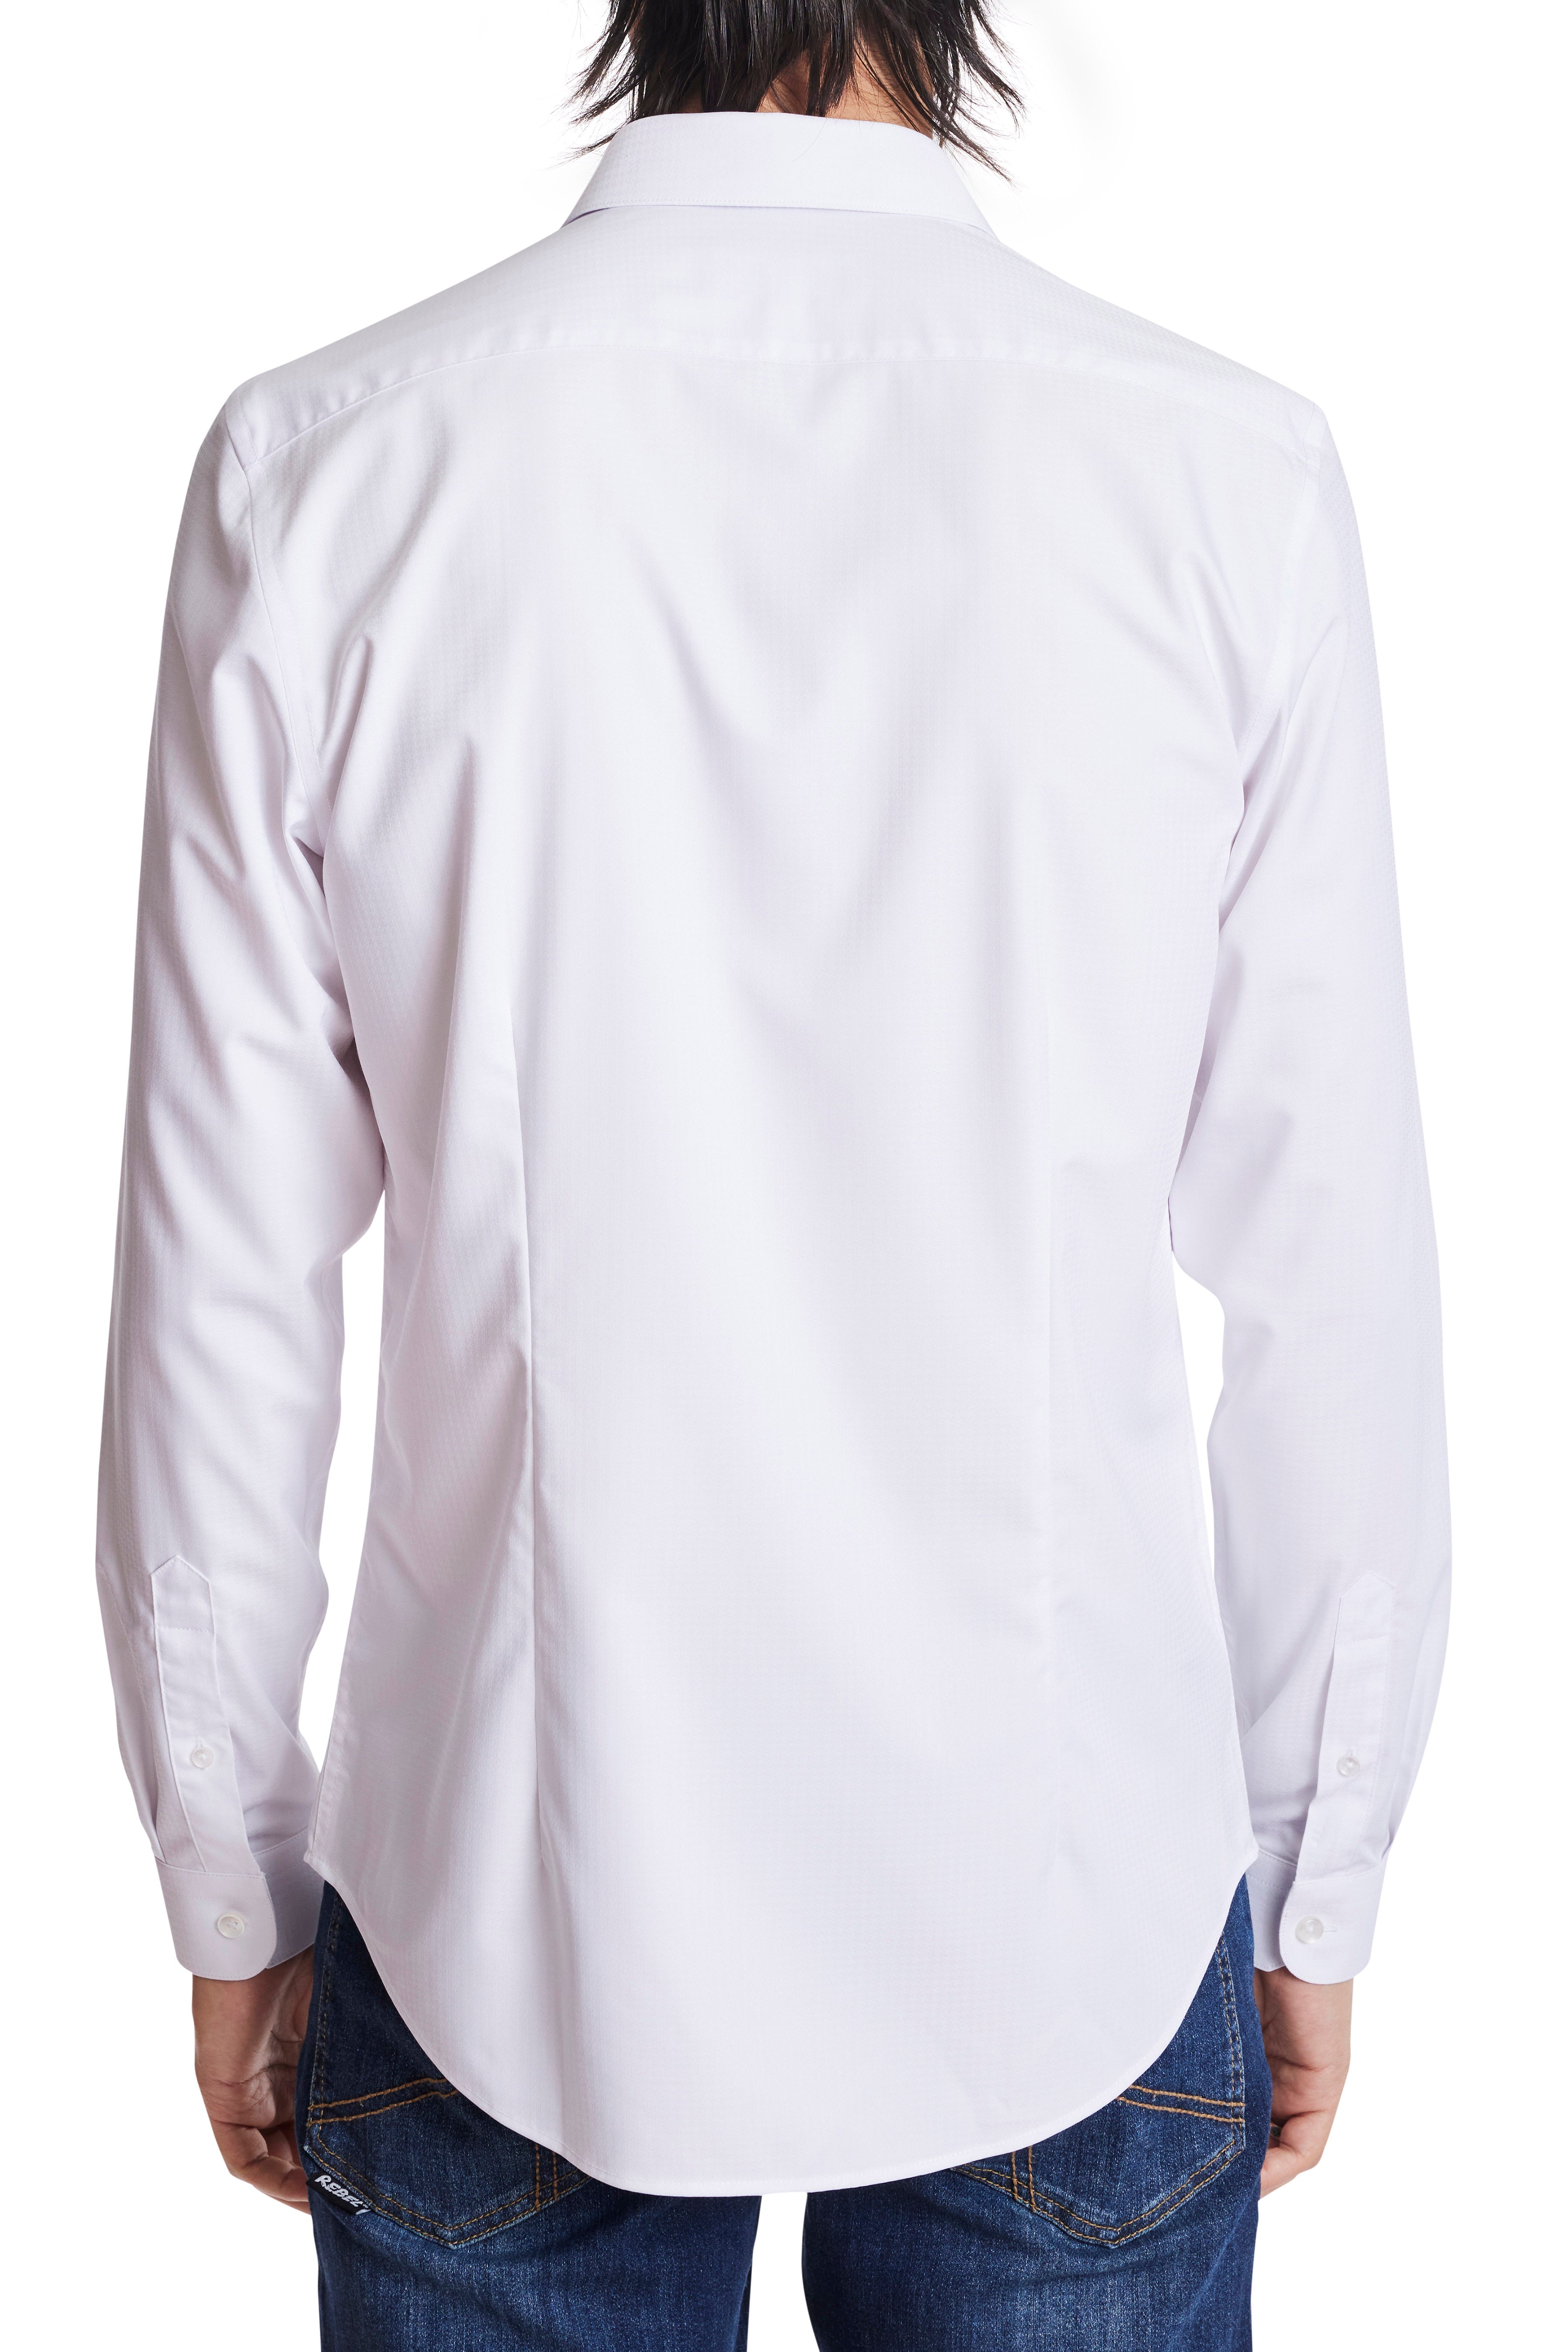 Samuel Spread Collar Shirt - White Houndstooth Jacquard